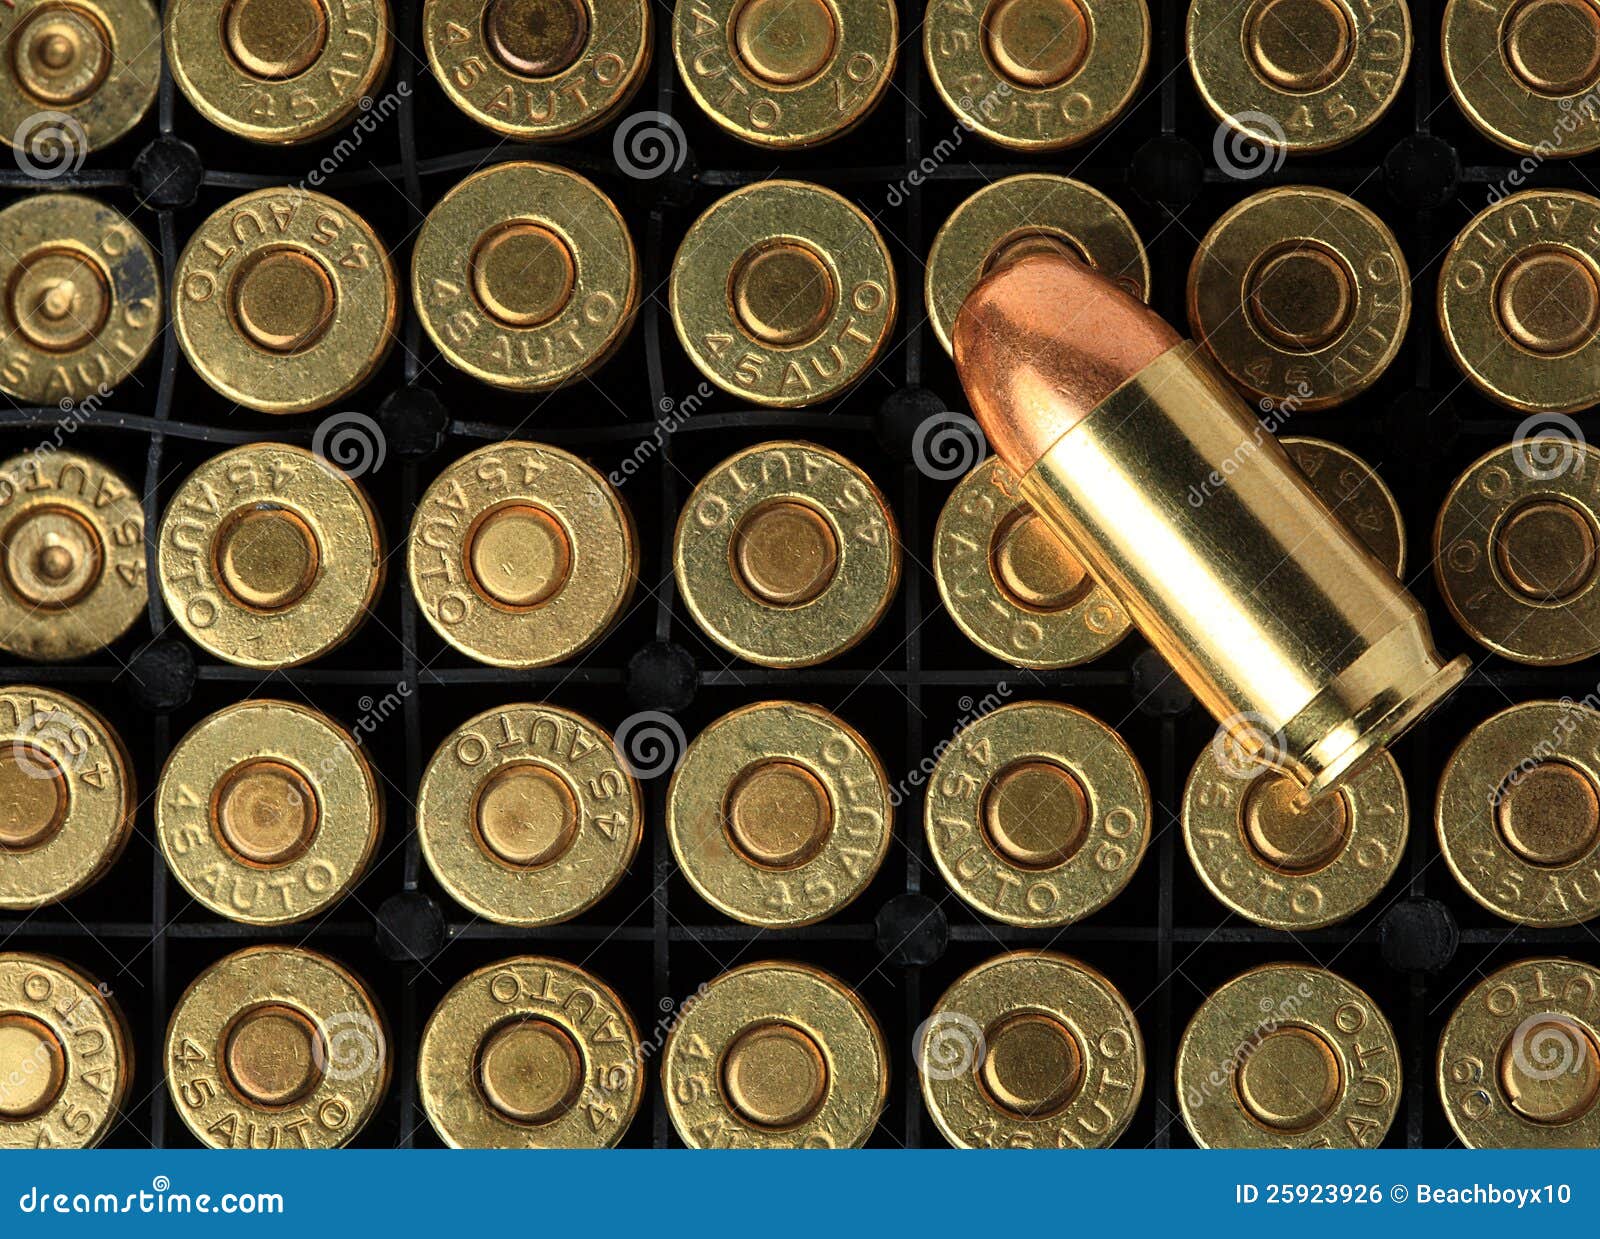 cartridges of . 45 acp pistols ammo